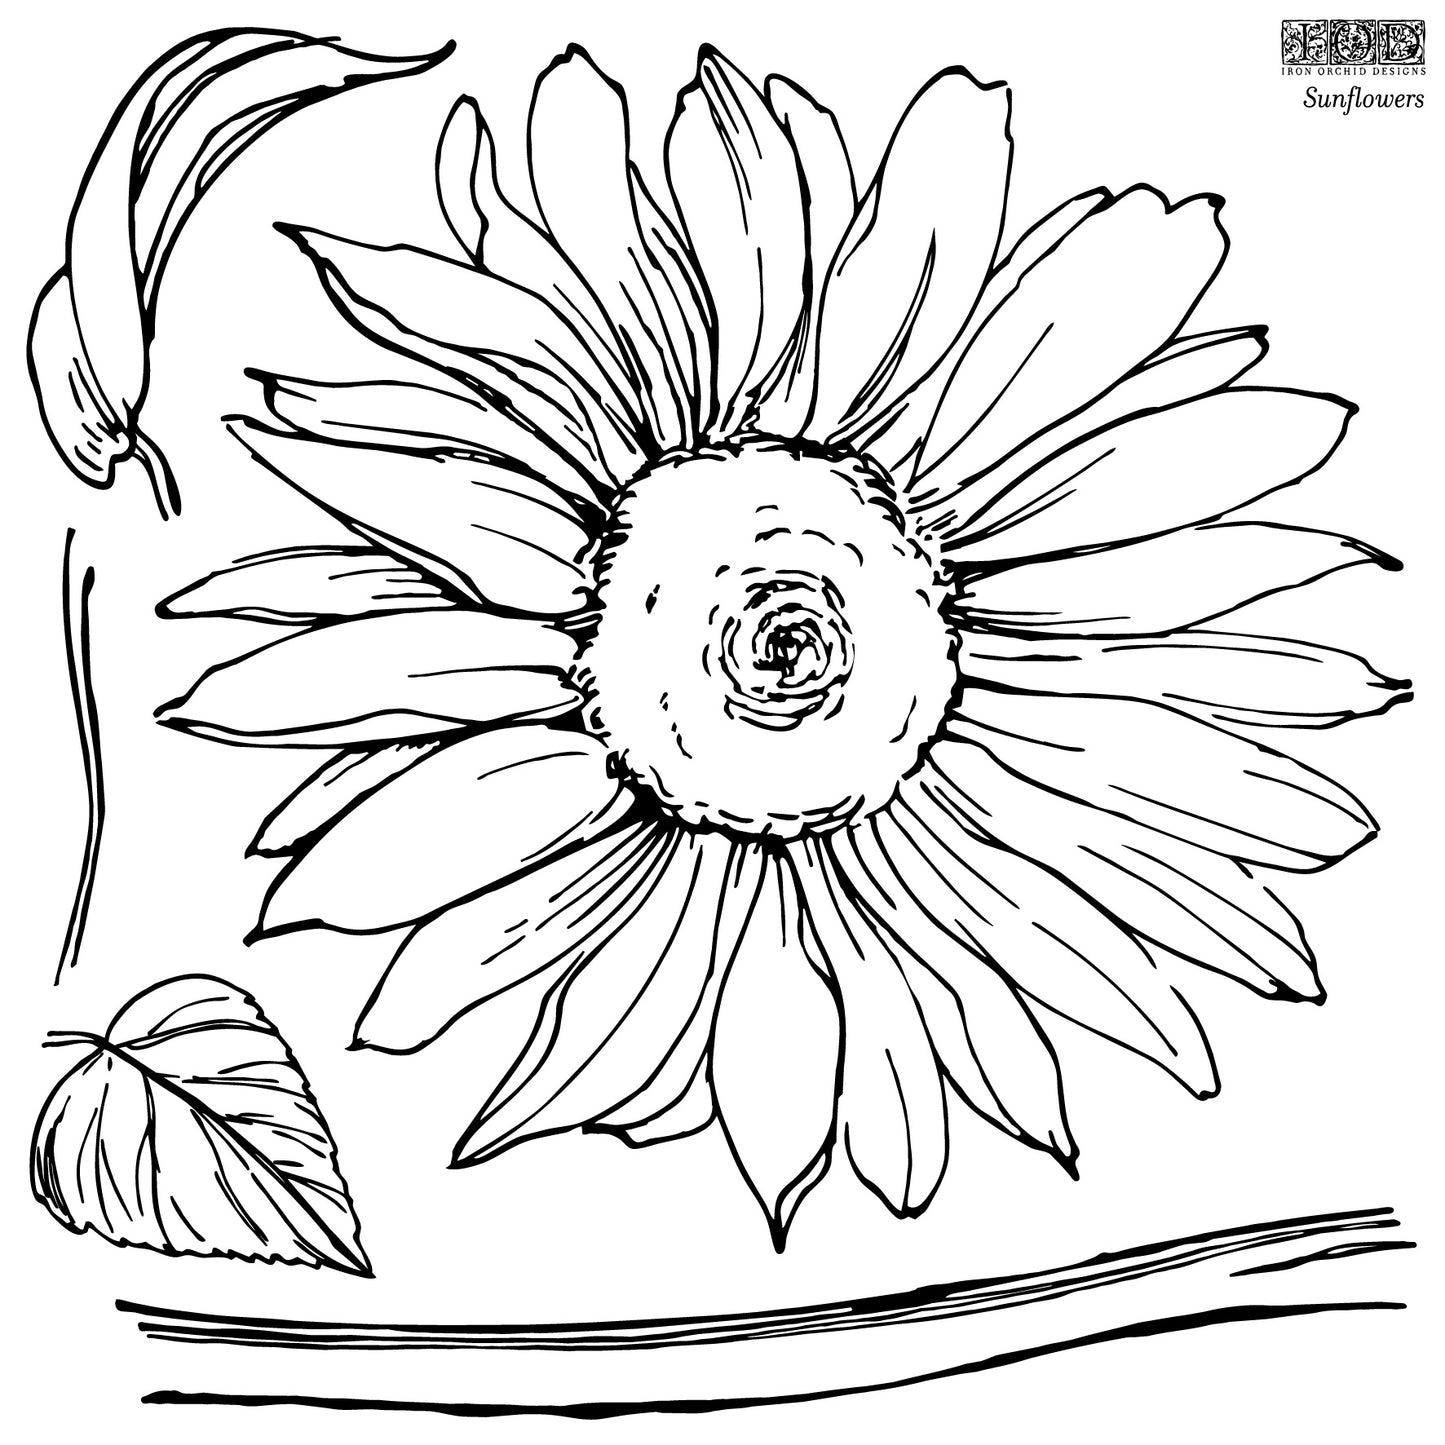 Sunflowers IOD Stamp™